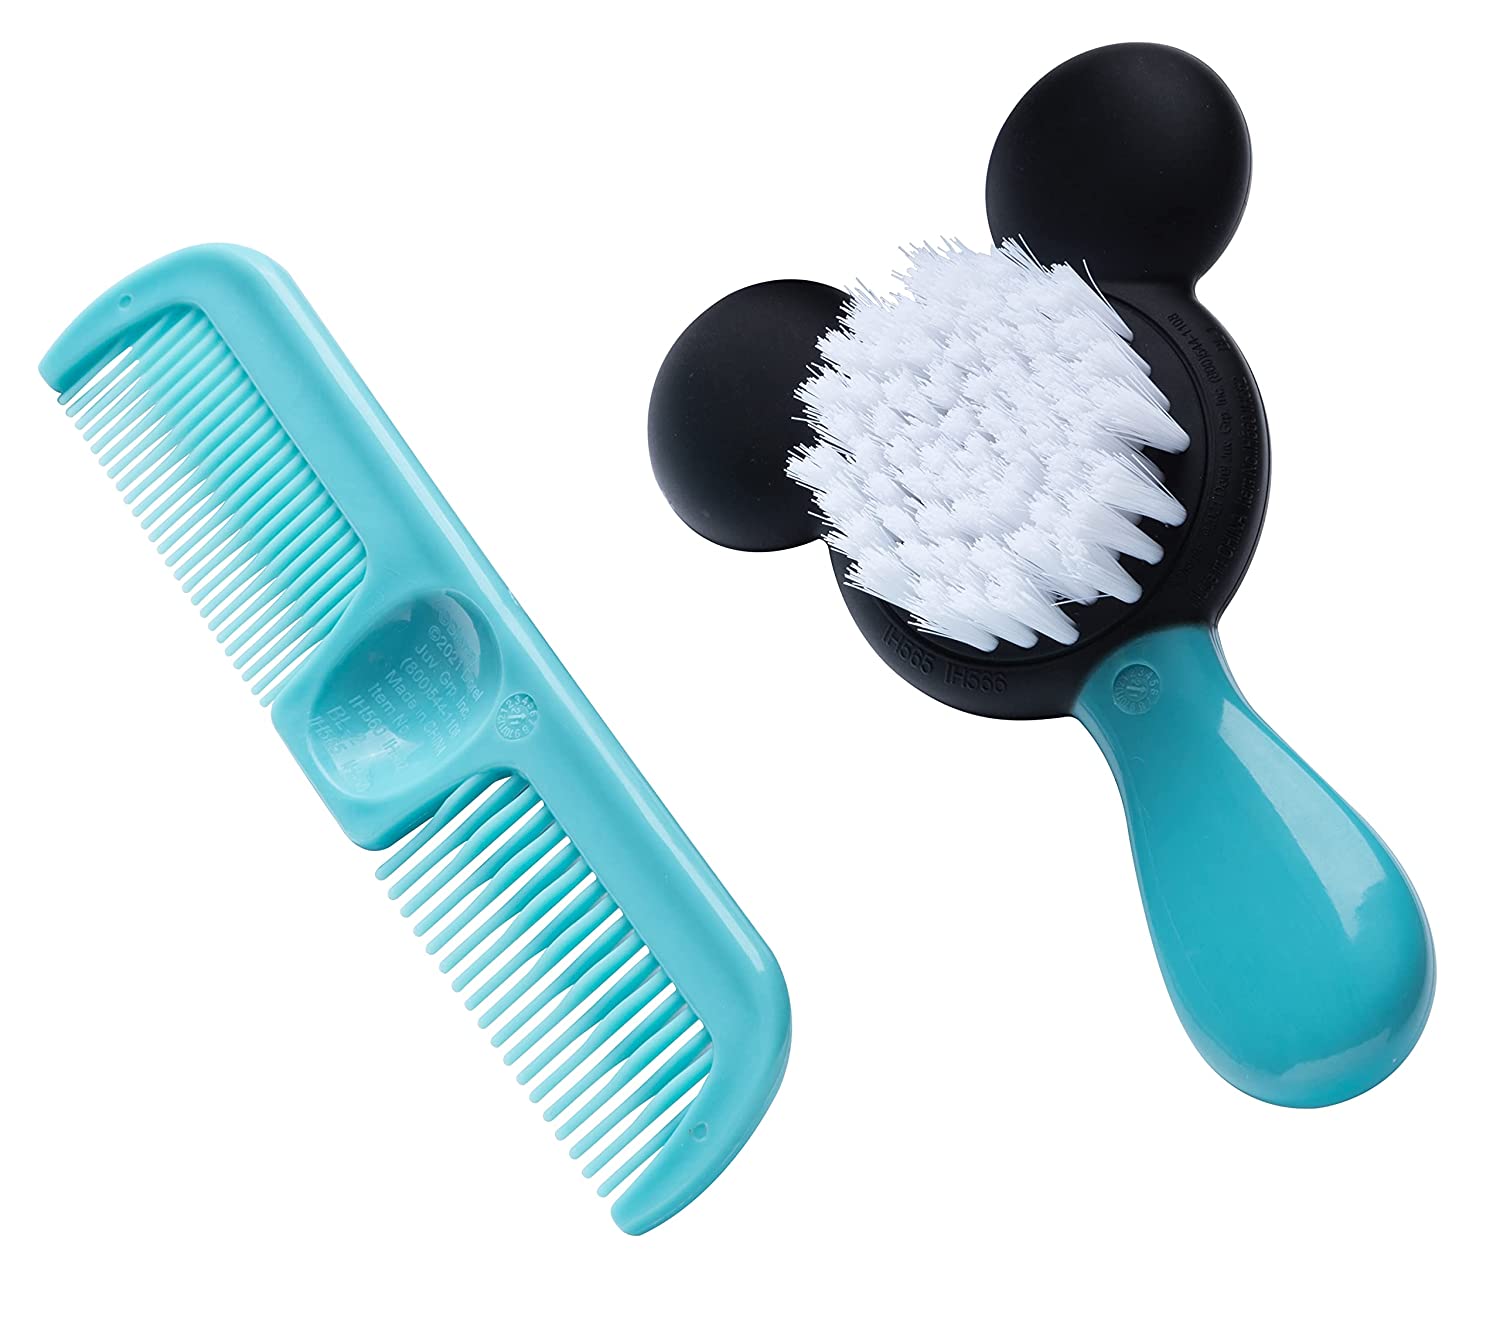 Disney Baby Mickey Mouse Brush & Comb Set, Aqua - With Easy Grip Handles